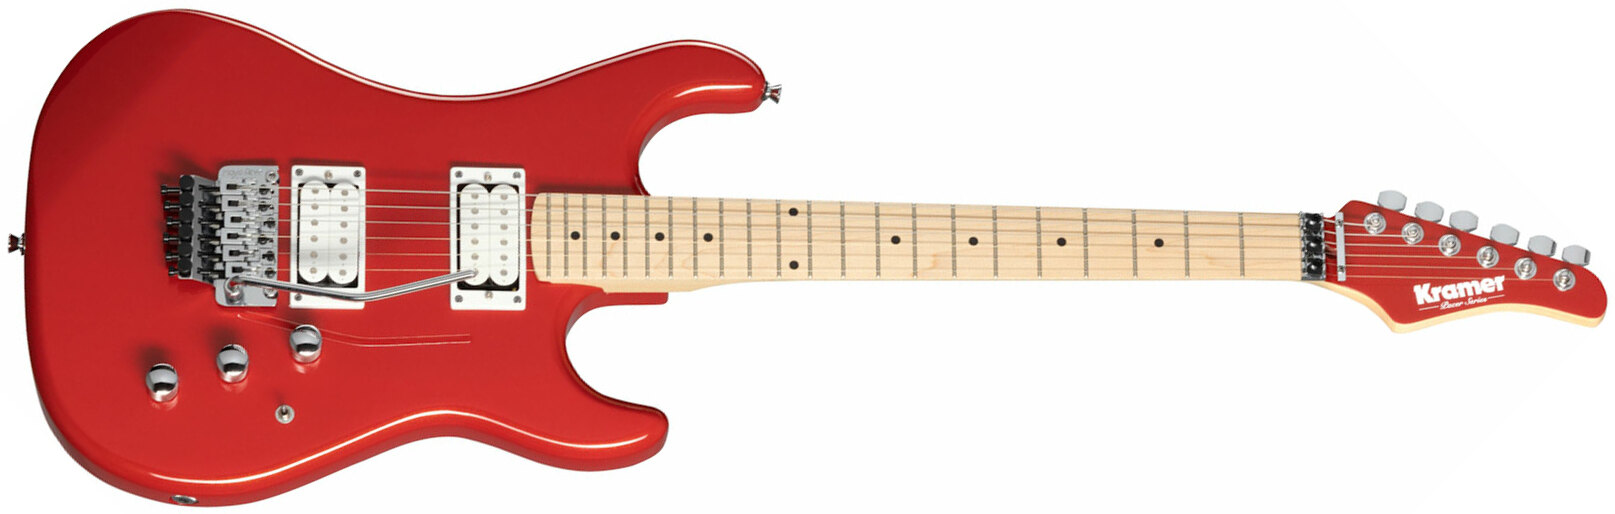 Kramer Pacer Classic 2h Fr Mn - Scarlet Red Metallic - Guitare Électrique Forme Str - Main picture